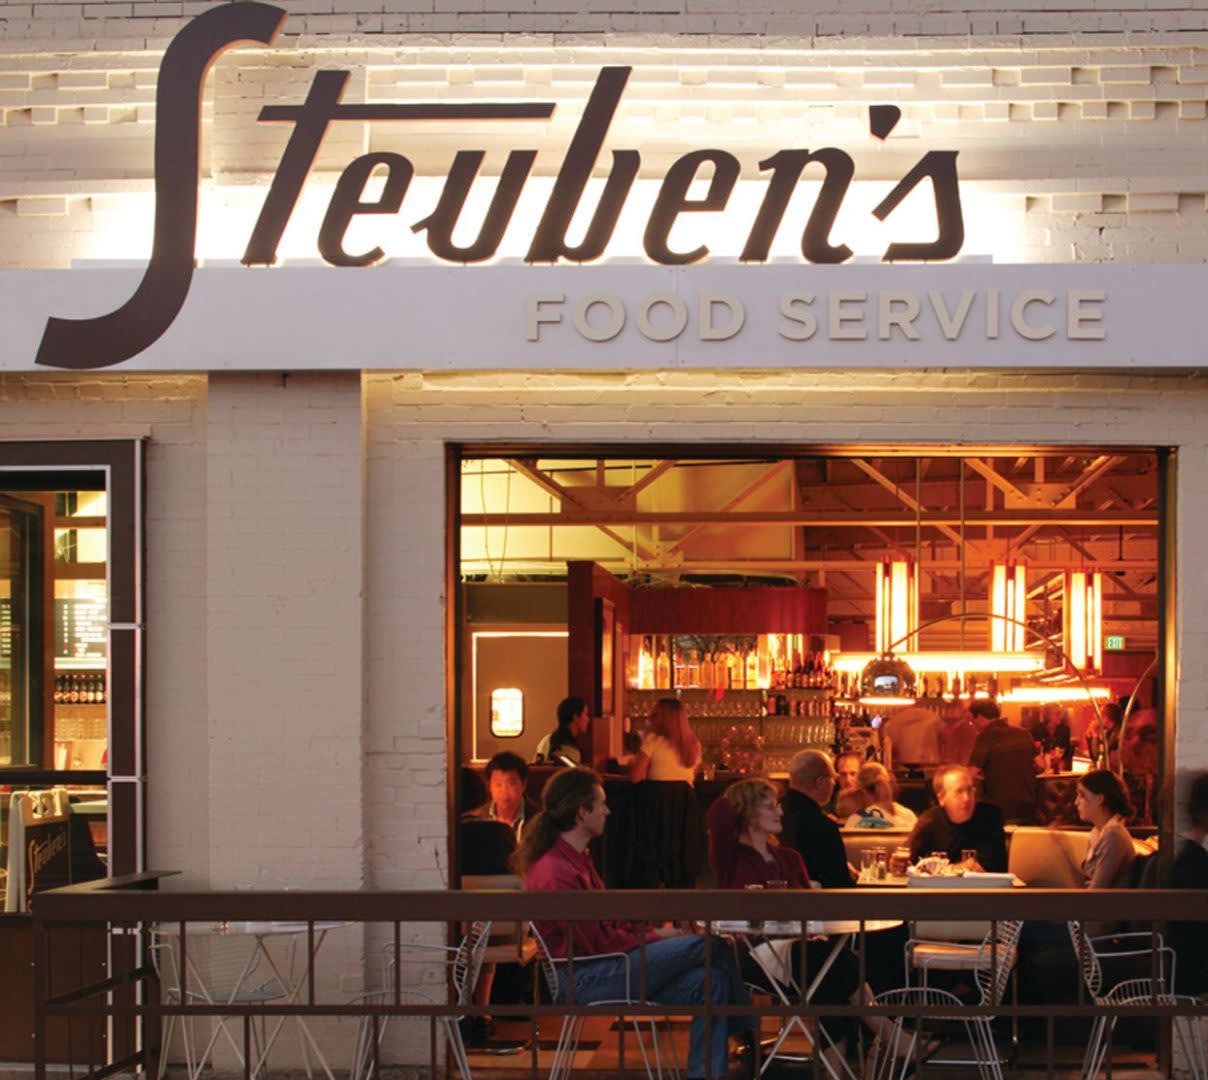 Mx - Steuben's - Exterior restaurant - featured